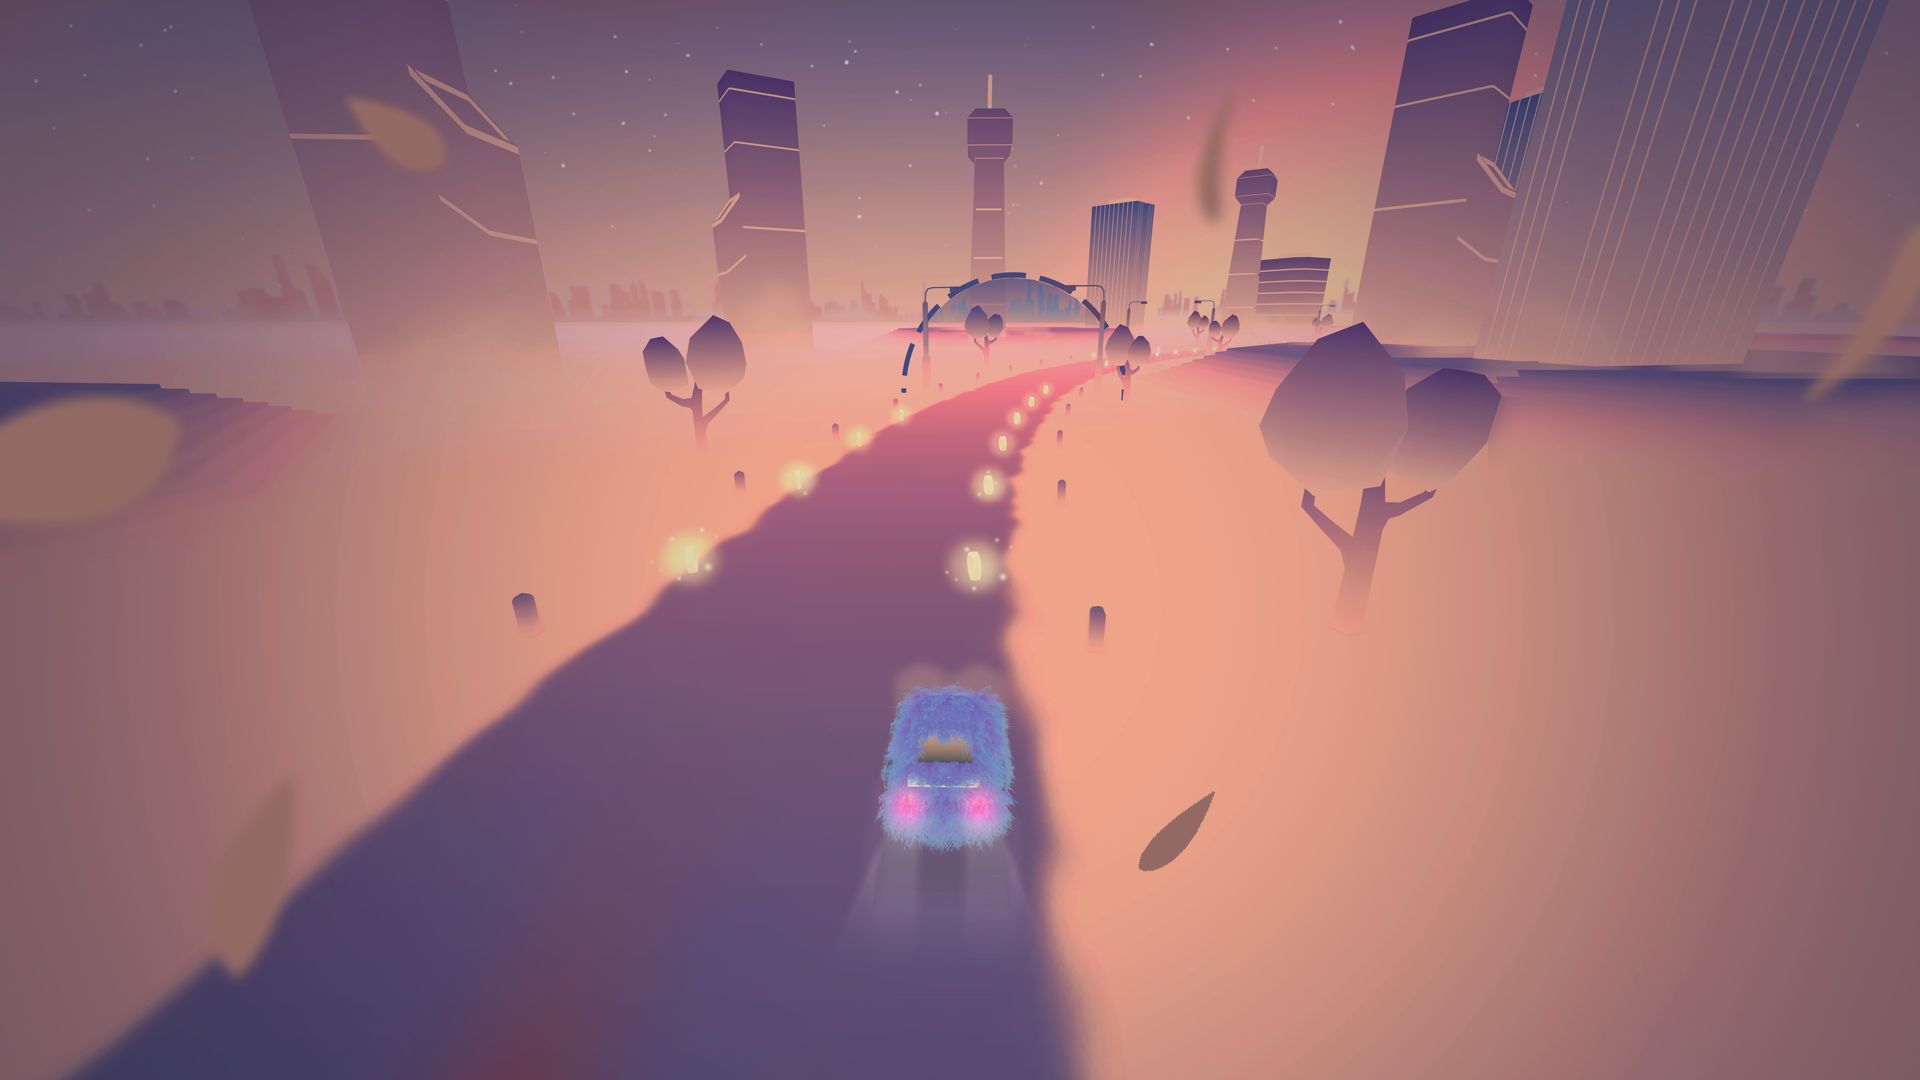 Fluffy Run - Android game screenshots.